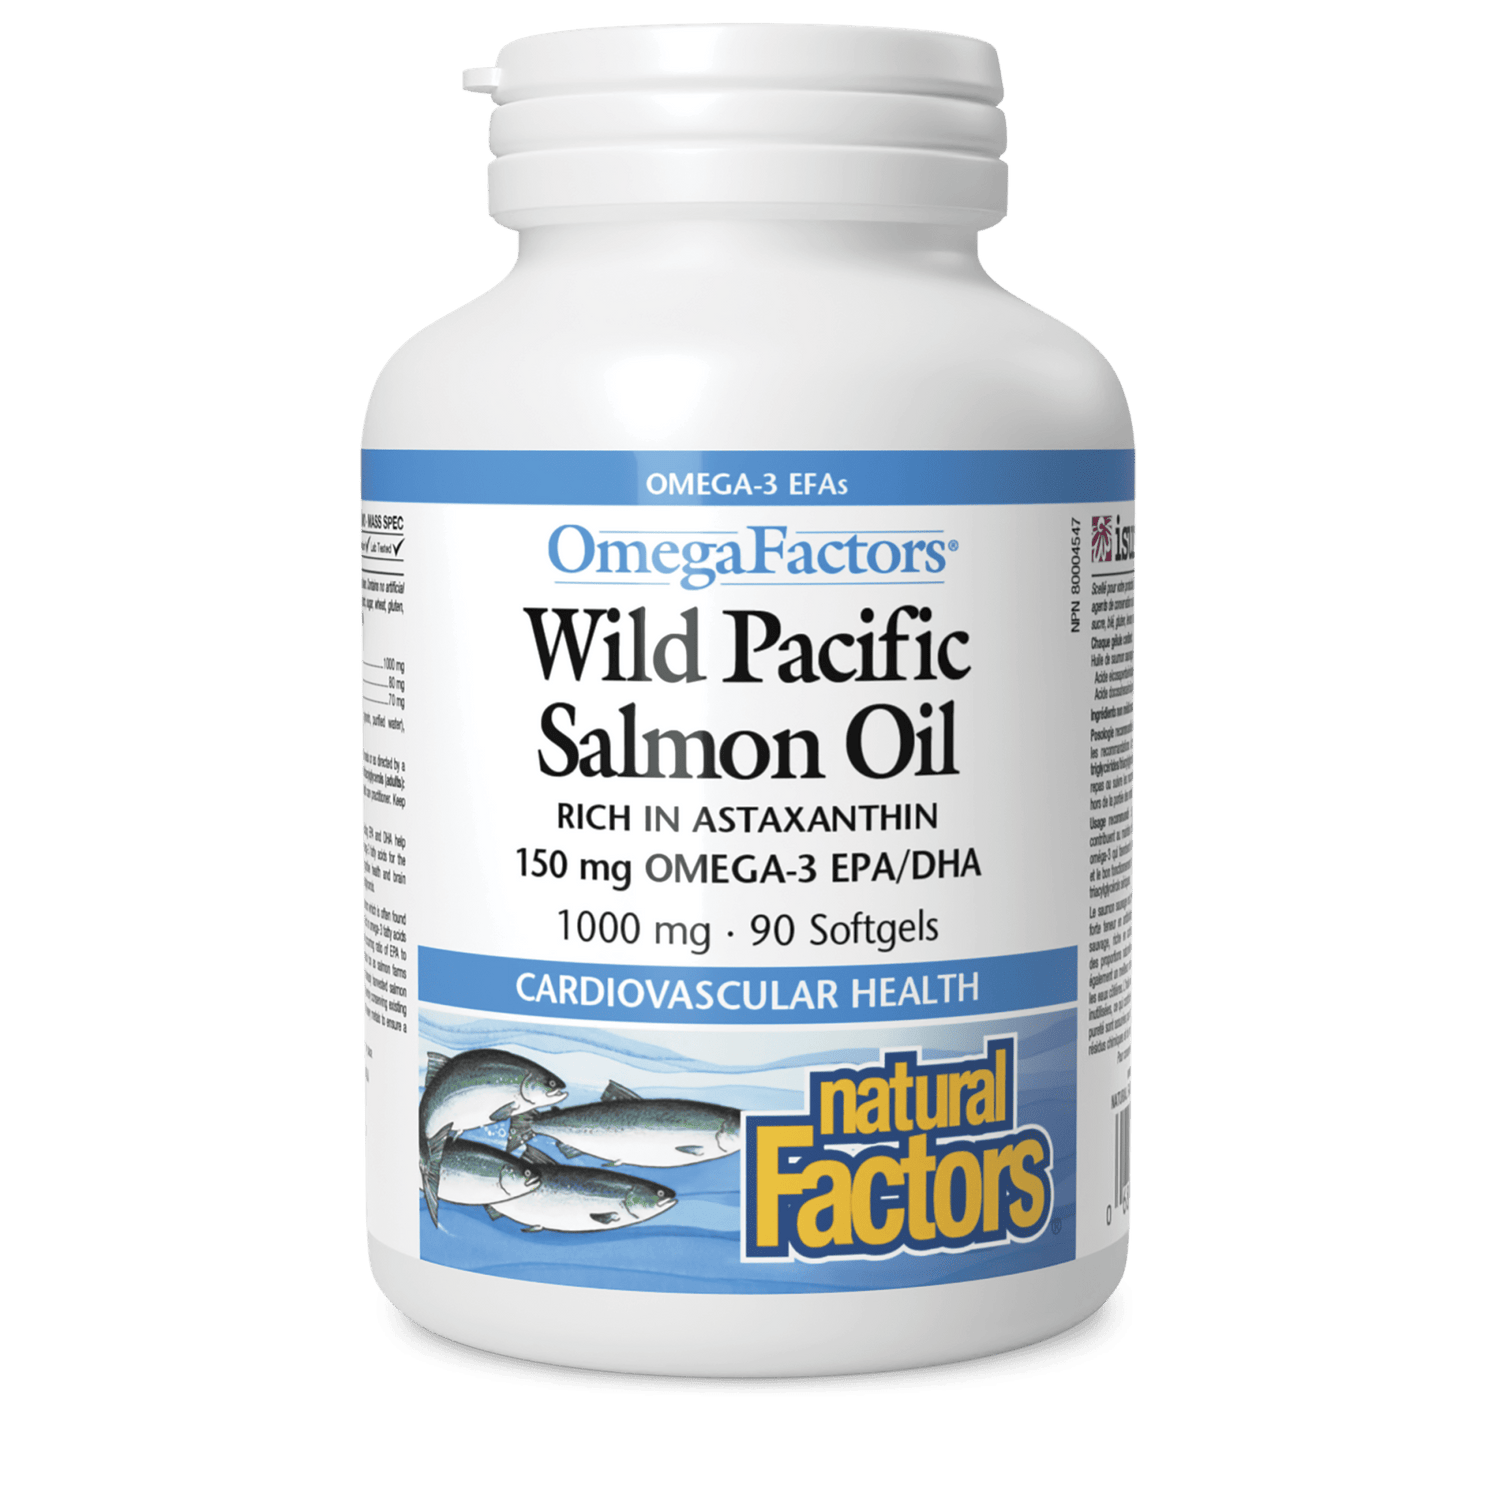 Wild Pacific Salmon Oil 1000 mg, OmegaFactors, Natural Factors|v|image|2256